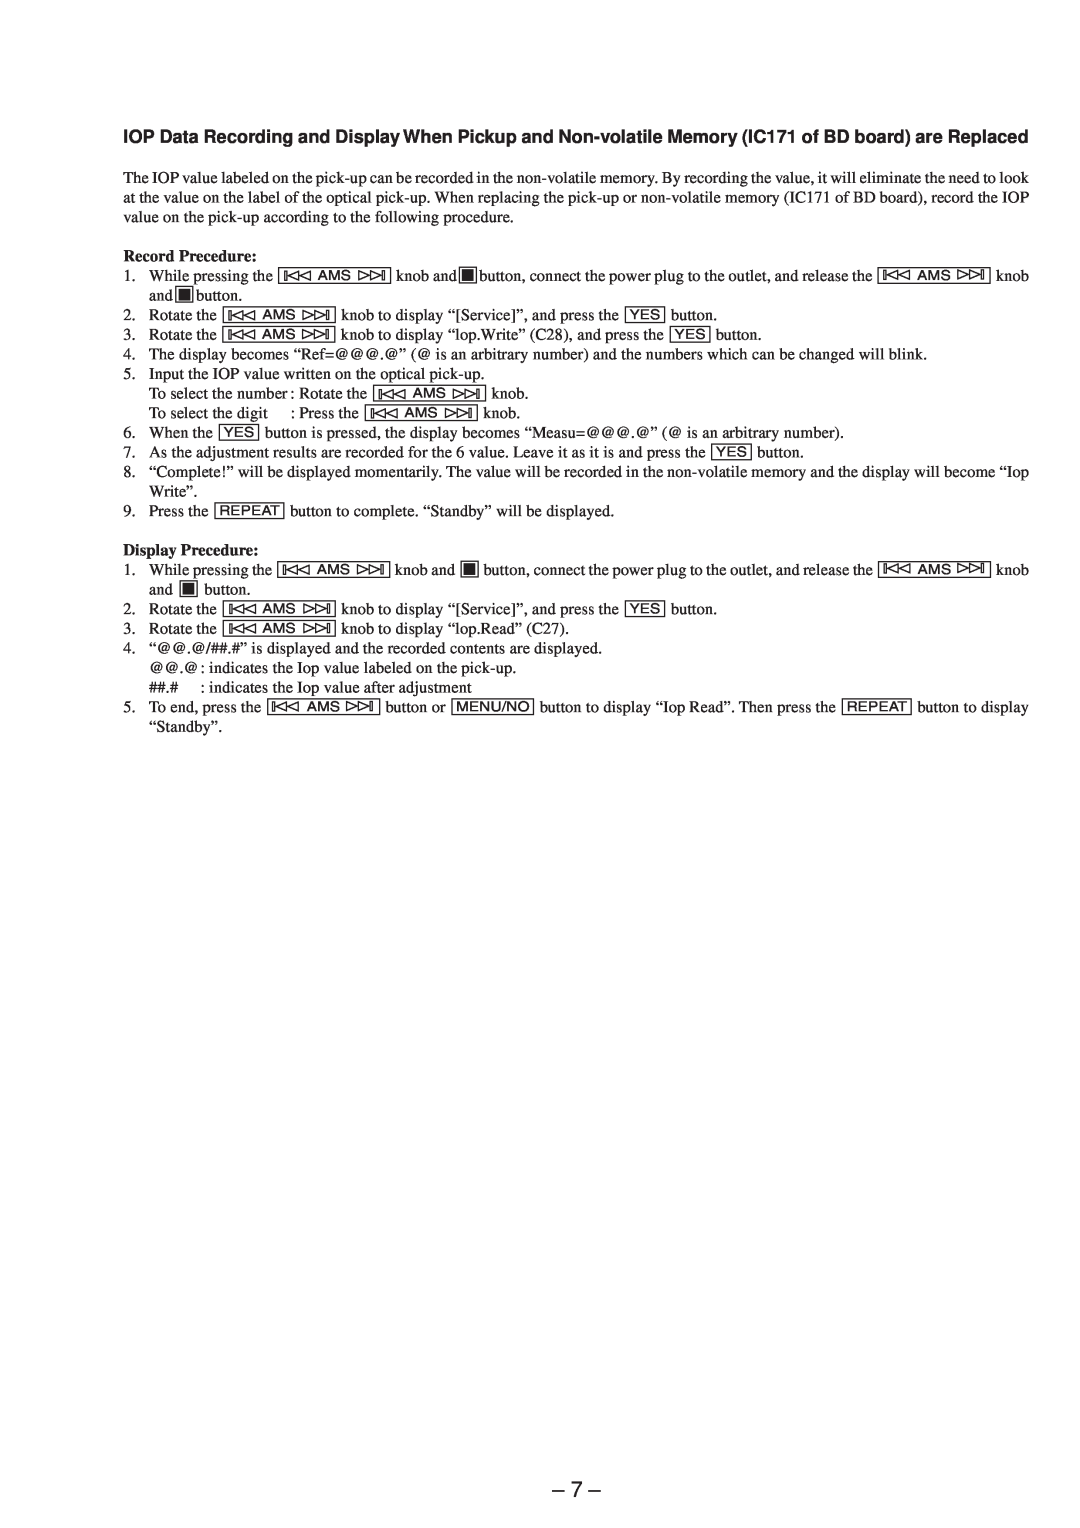 Sony MDS-JB920 service manual 7, Record Precedure, Display Precedure 